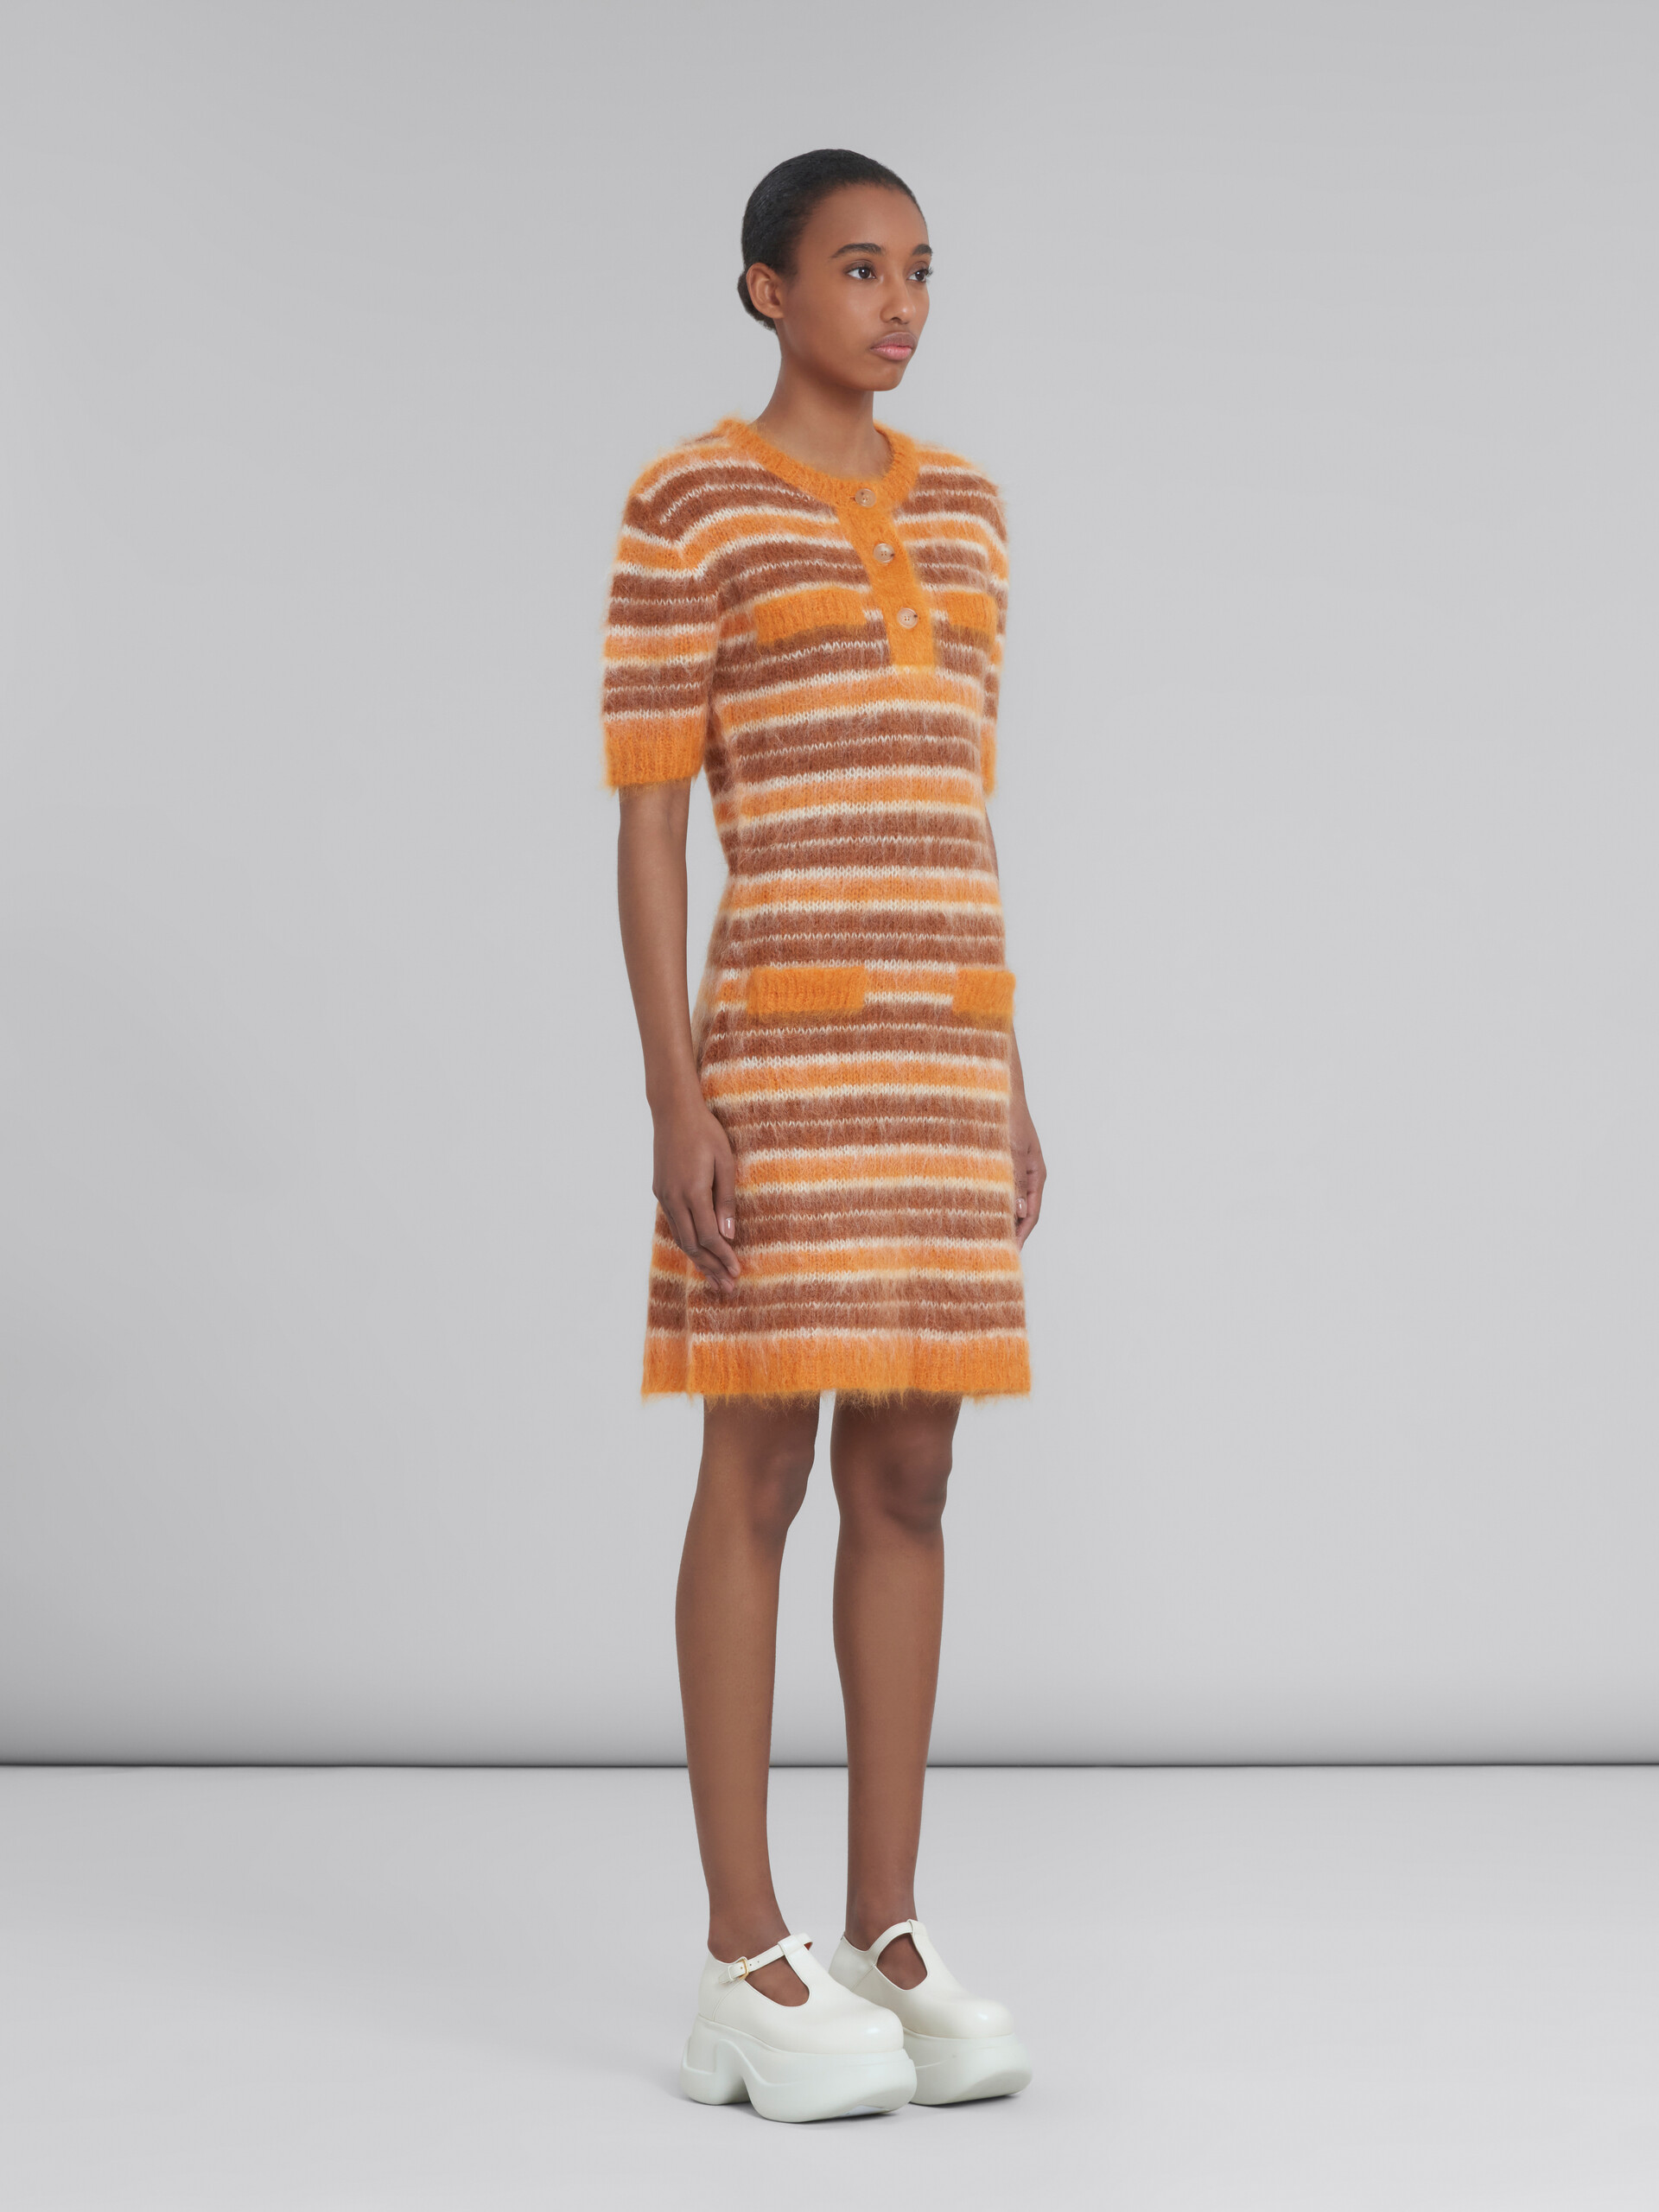 Mohair dress with orange stripes - Dresses - Image 6